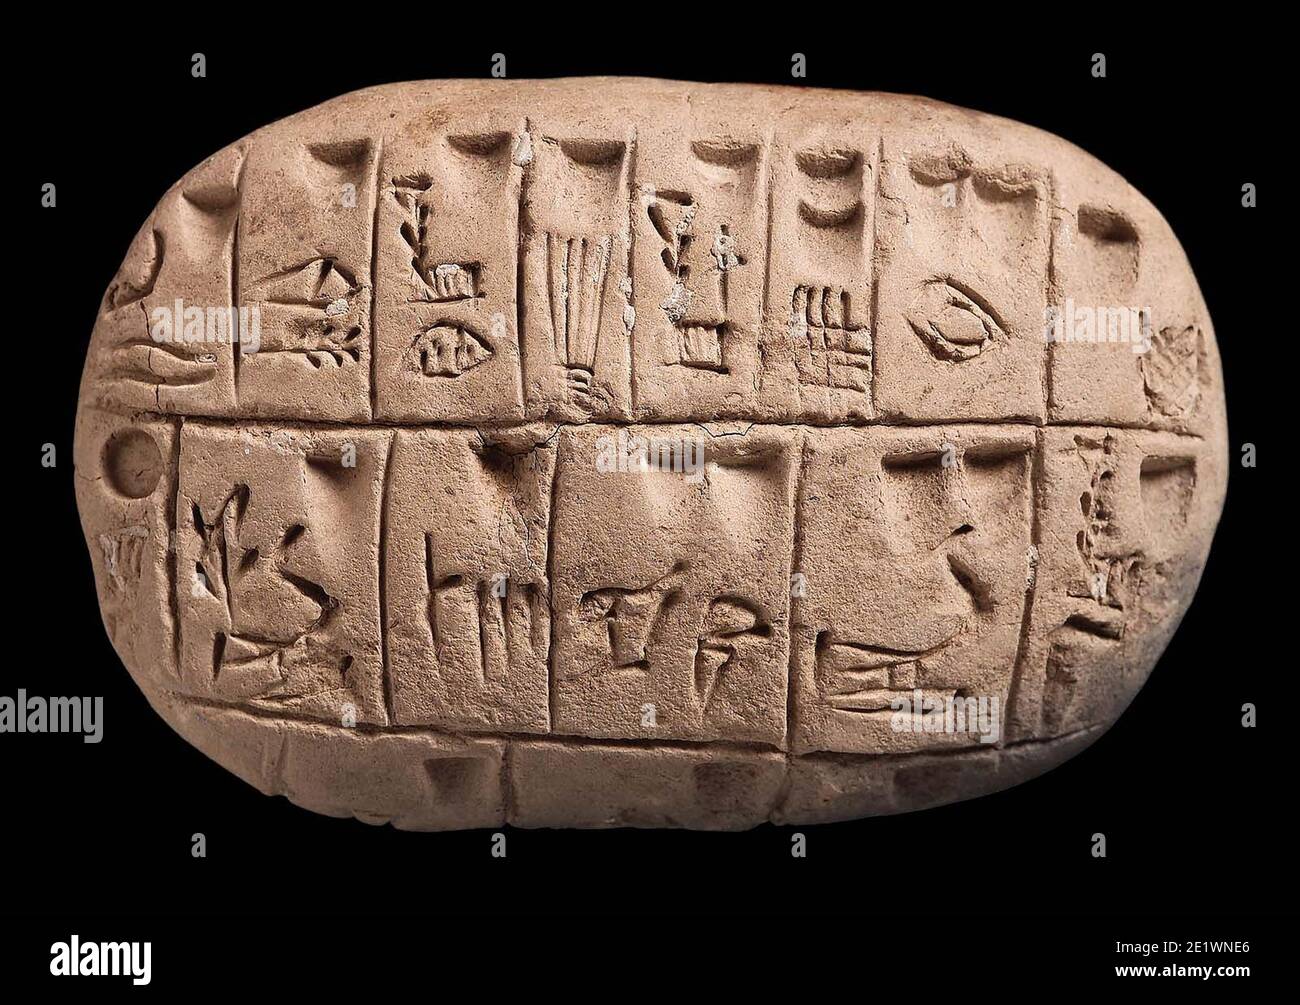 6688. Tablet with Pictographs, Uruk, Mesopotamia, dating c. 3500 BC. Stock Photo